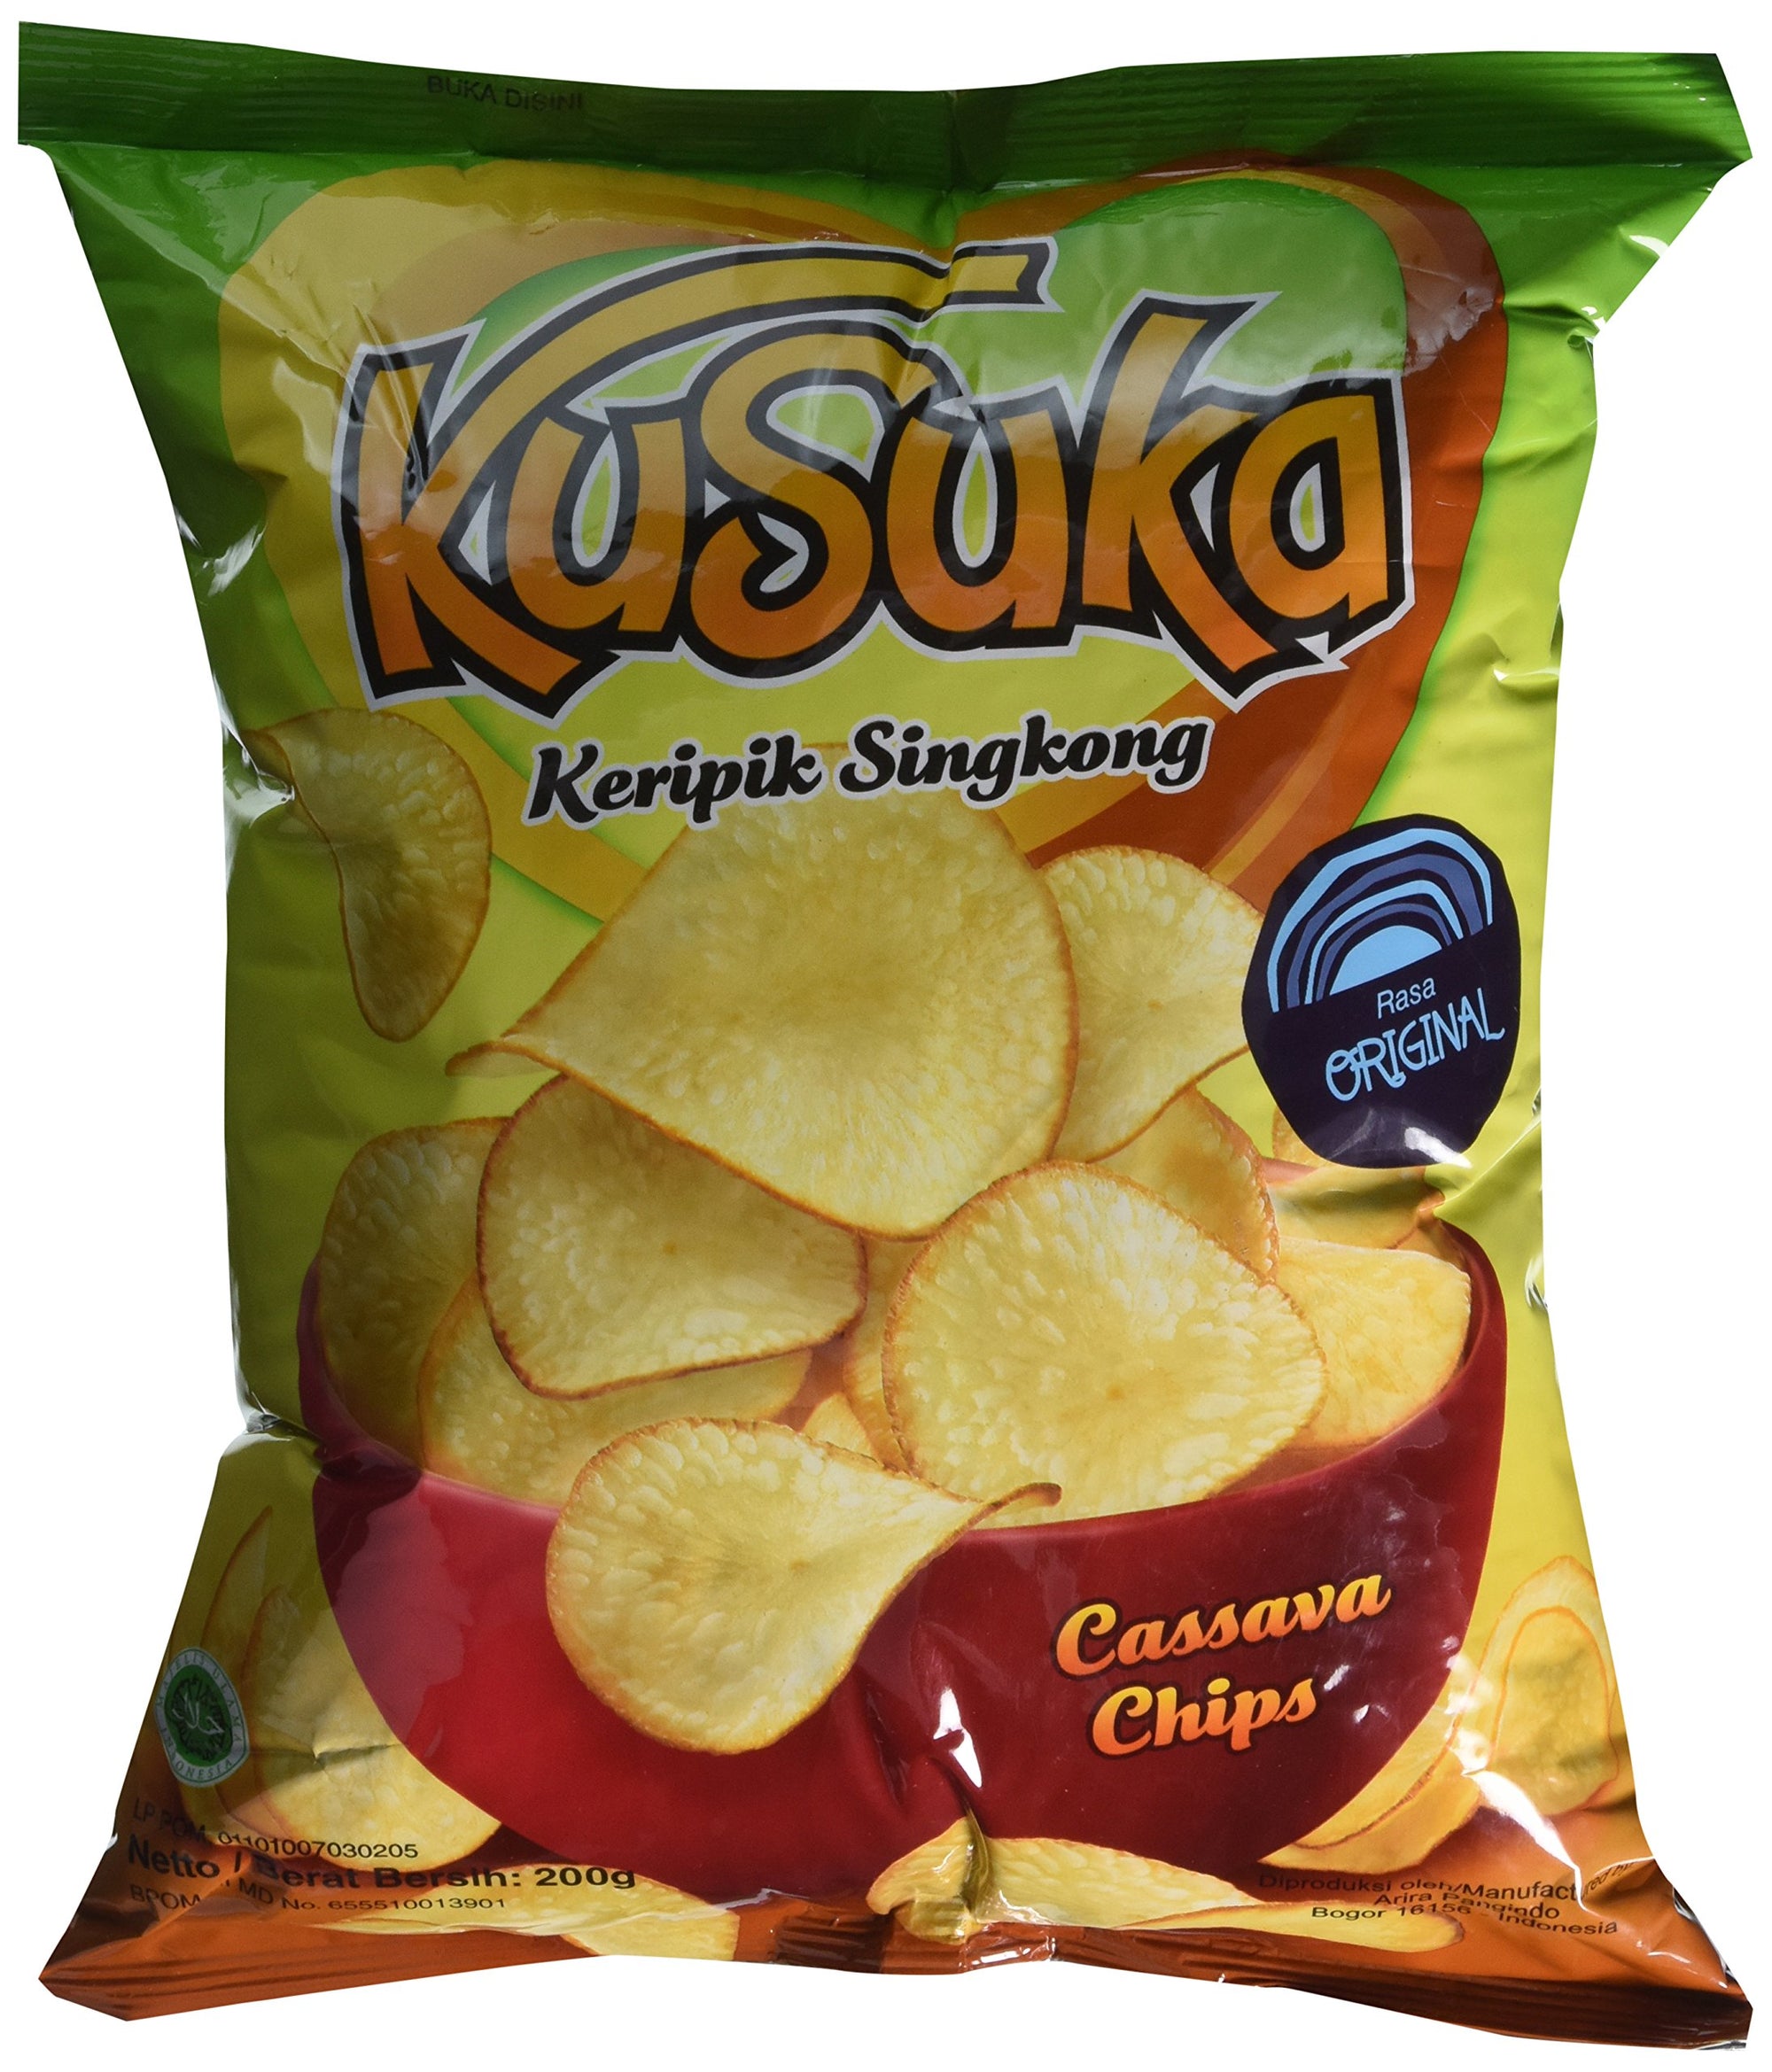 Kusuka Cassava Chips, Original, 8 Ounce